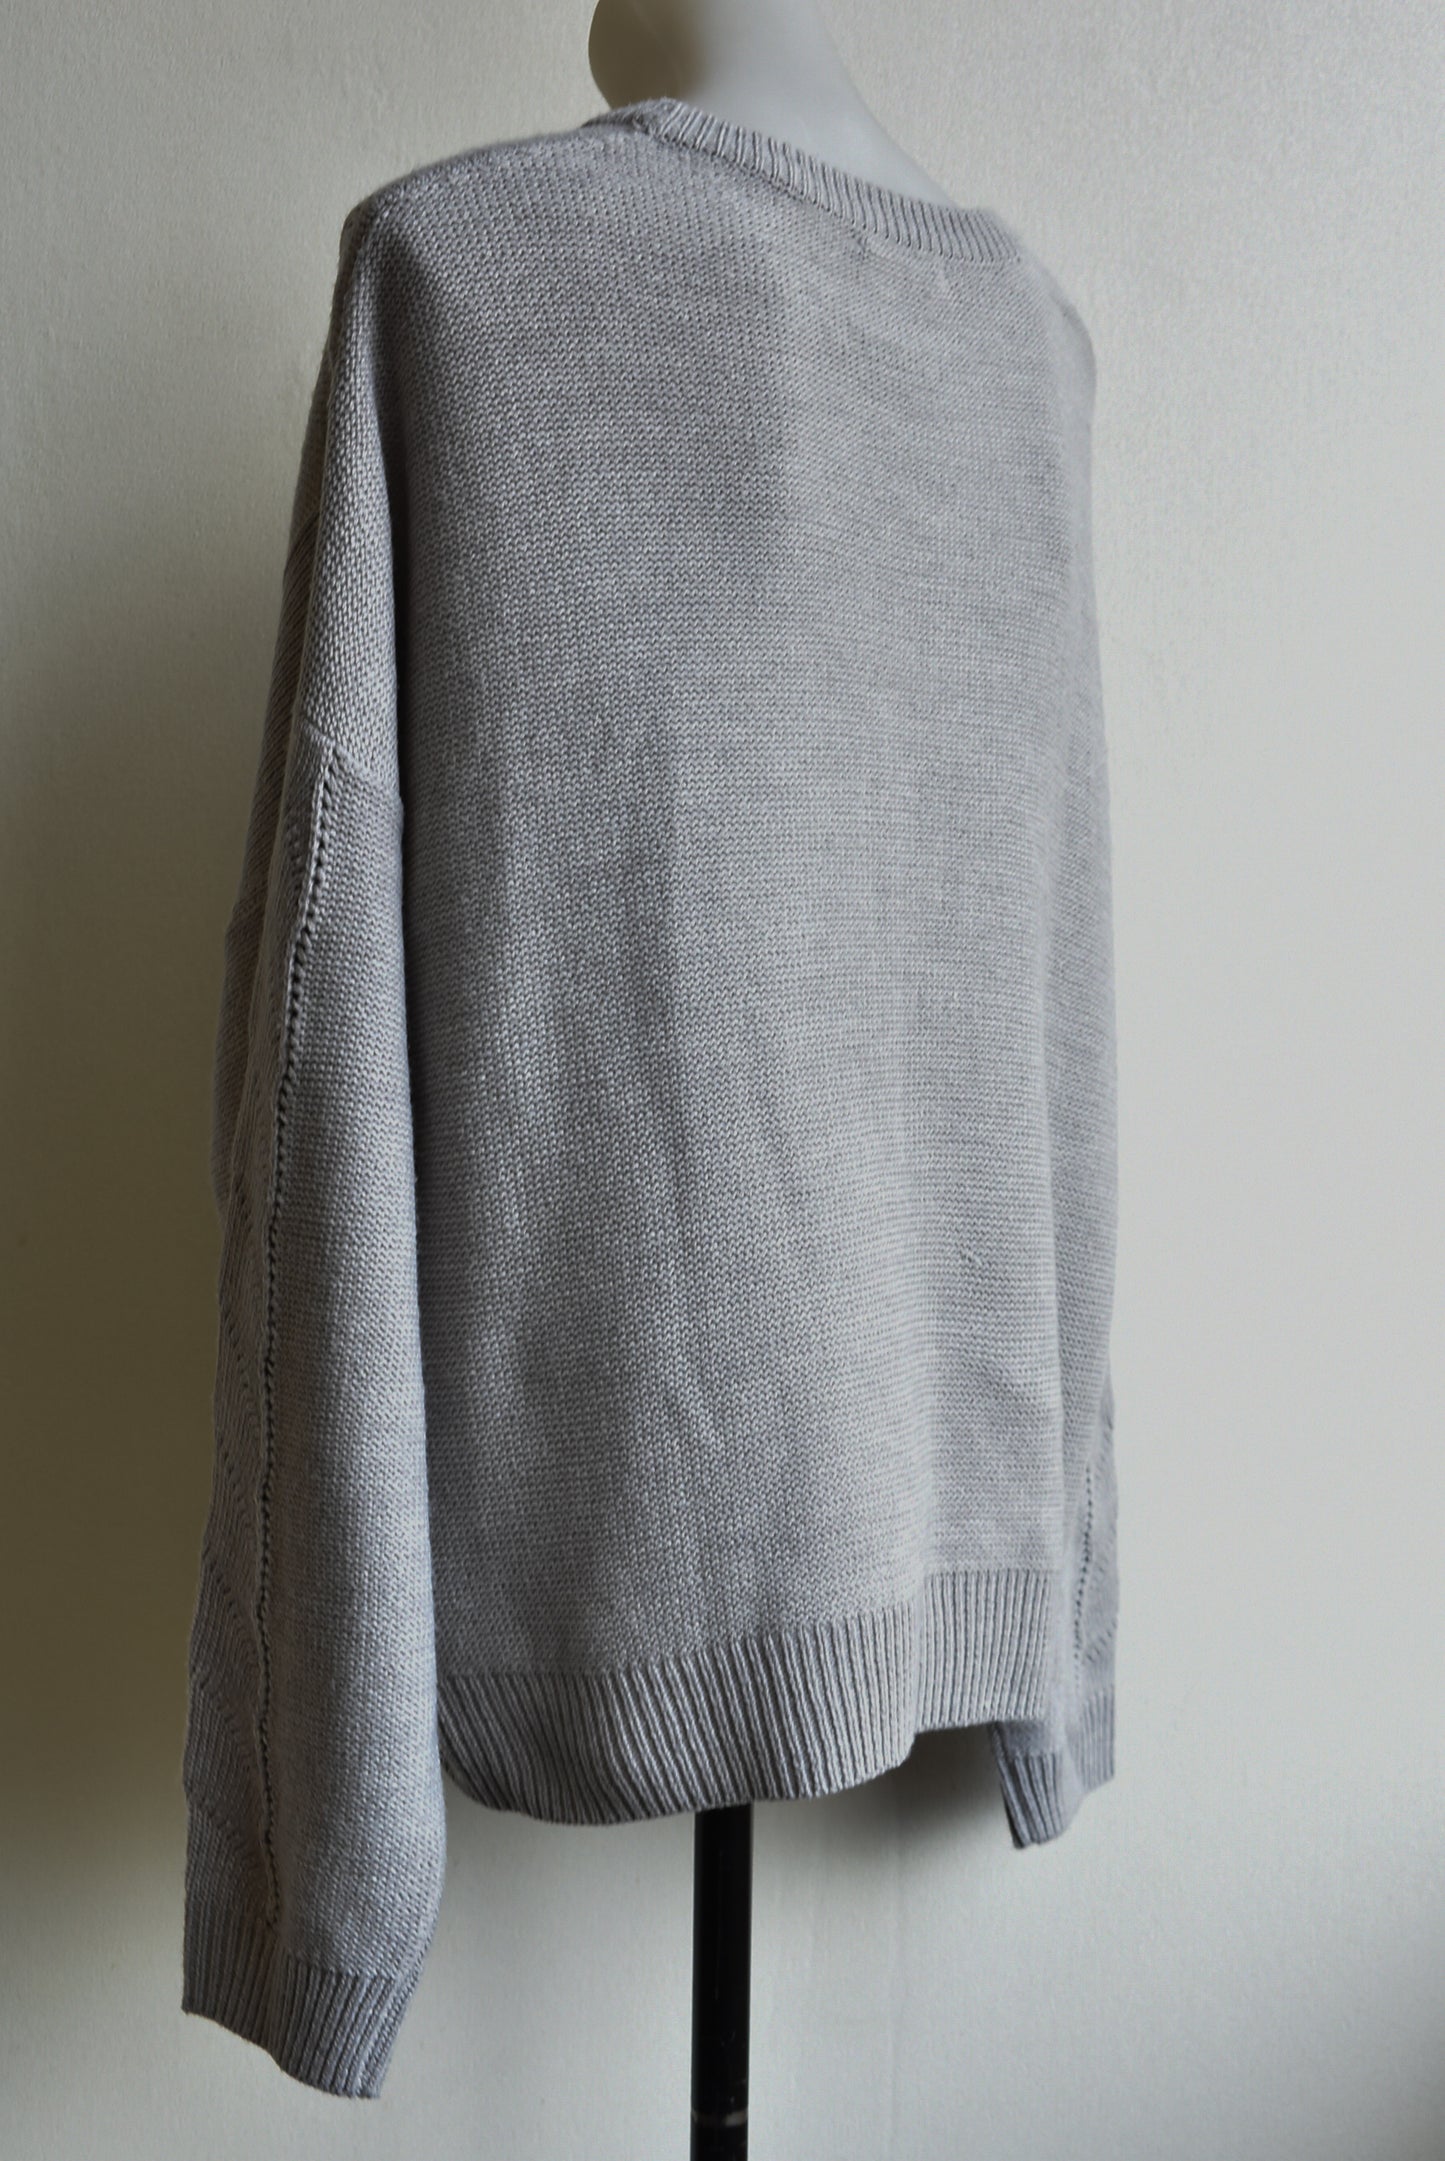 Spirit grey knit-texture top, size 18